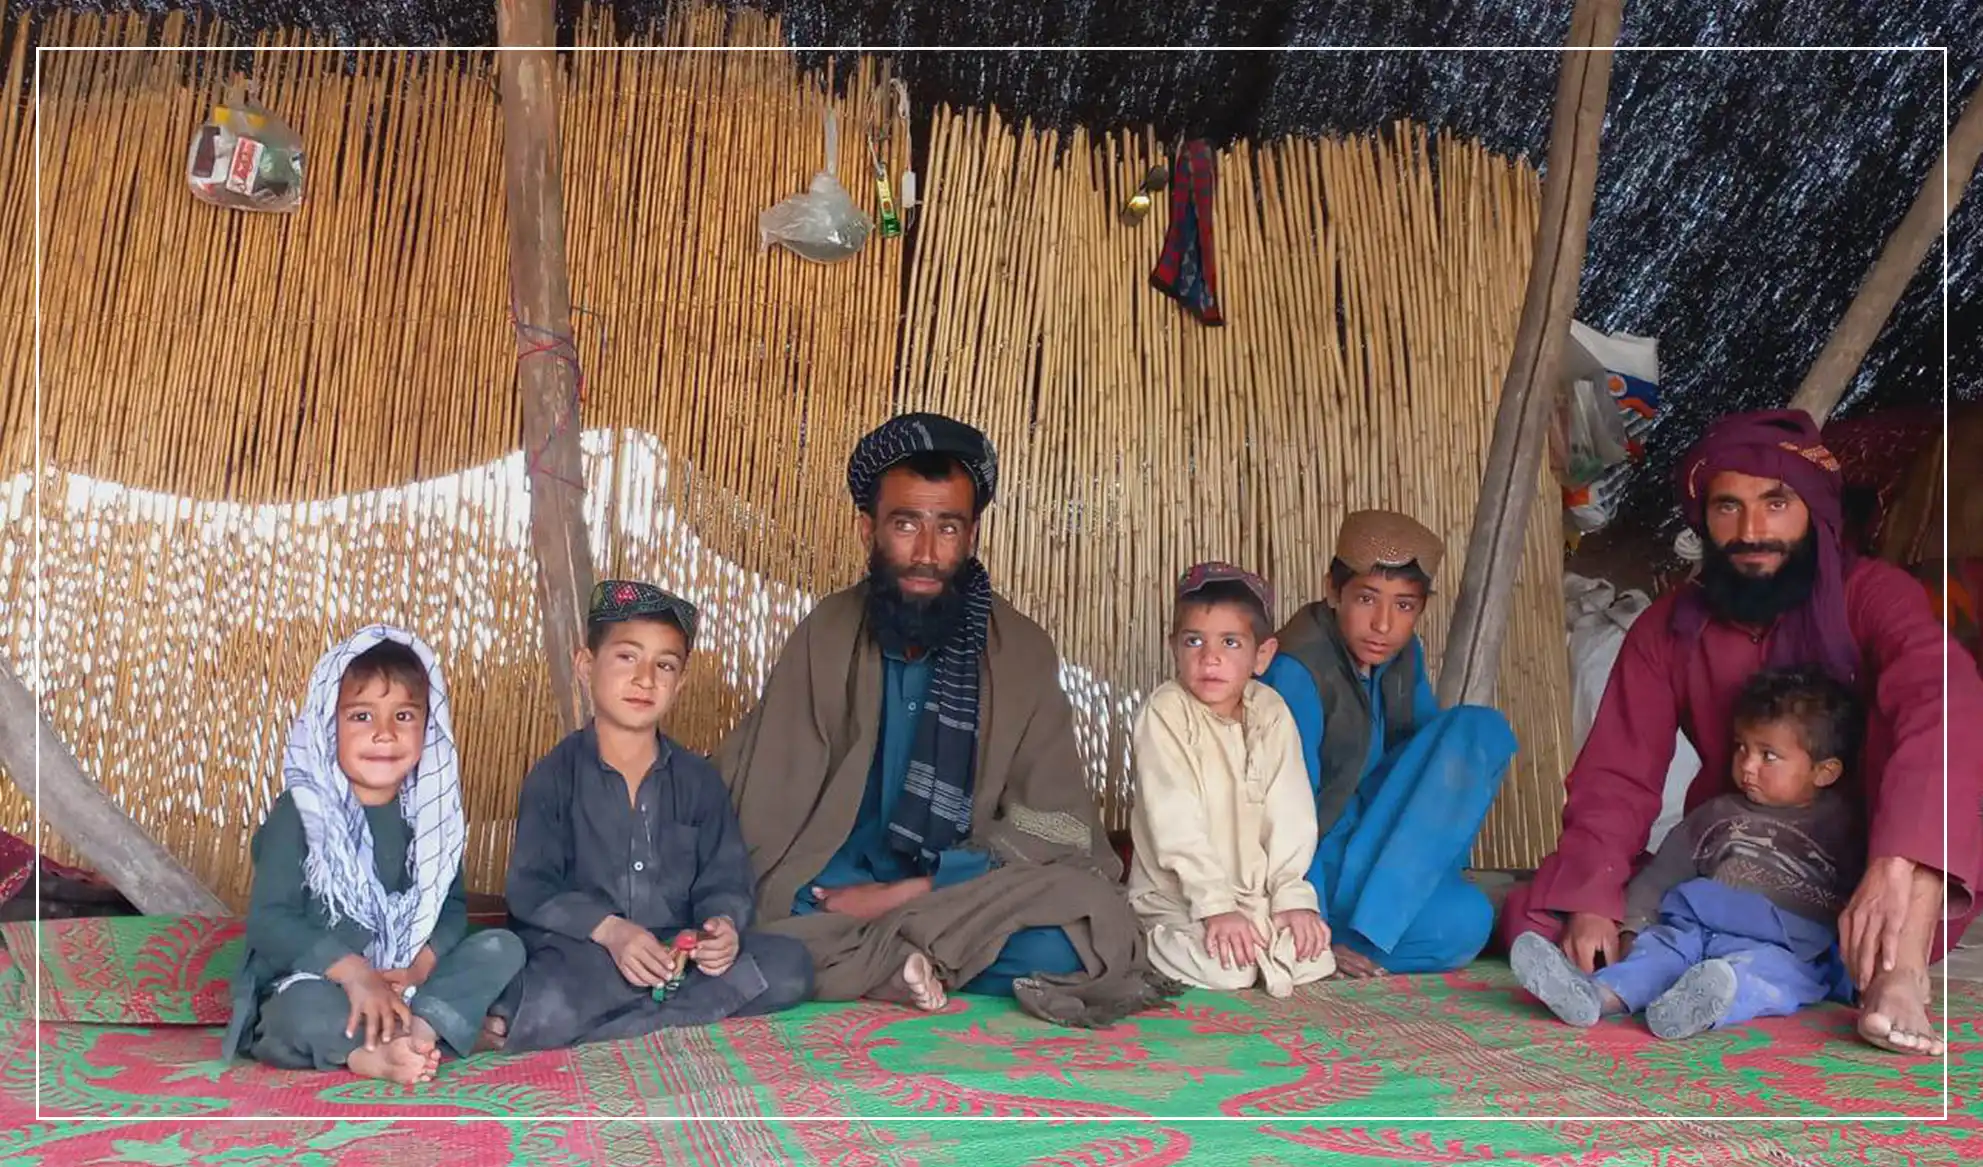 Deprived of basic amenities, complain Takhar nomads